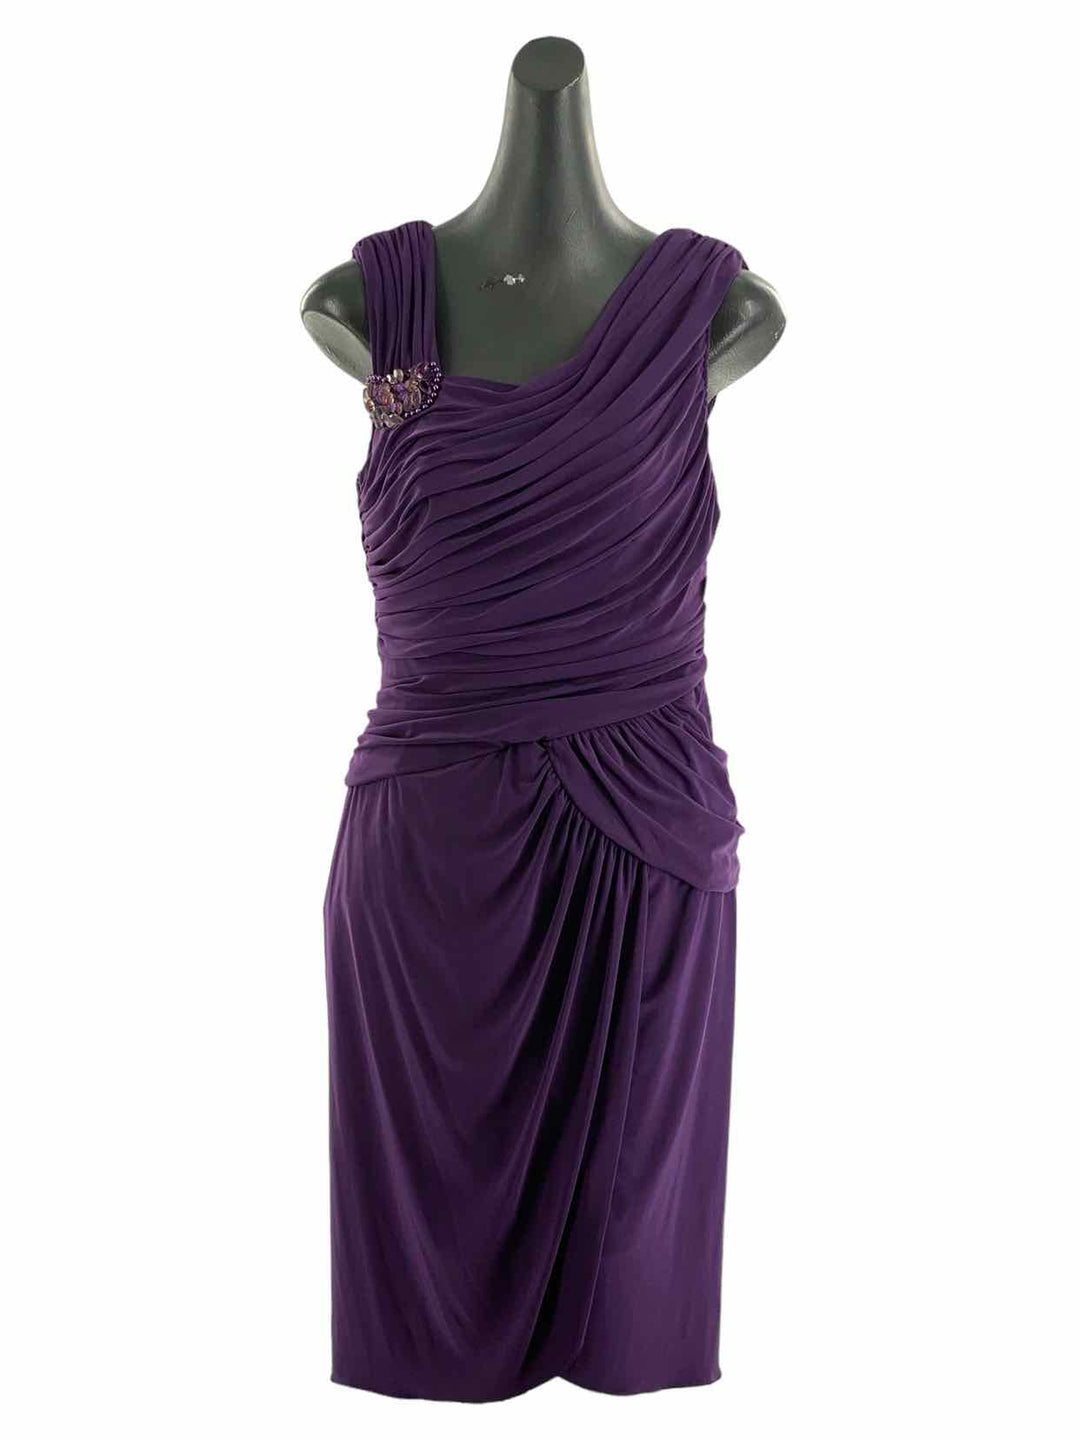 Adriana Papell Size 14 Purple Dress